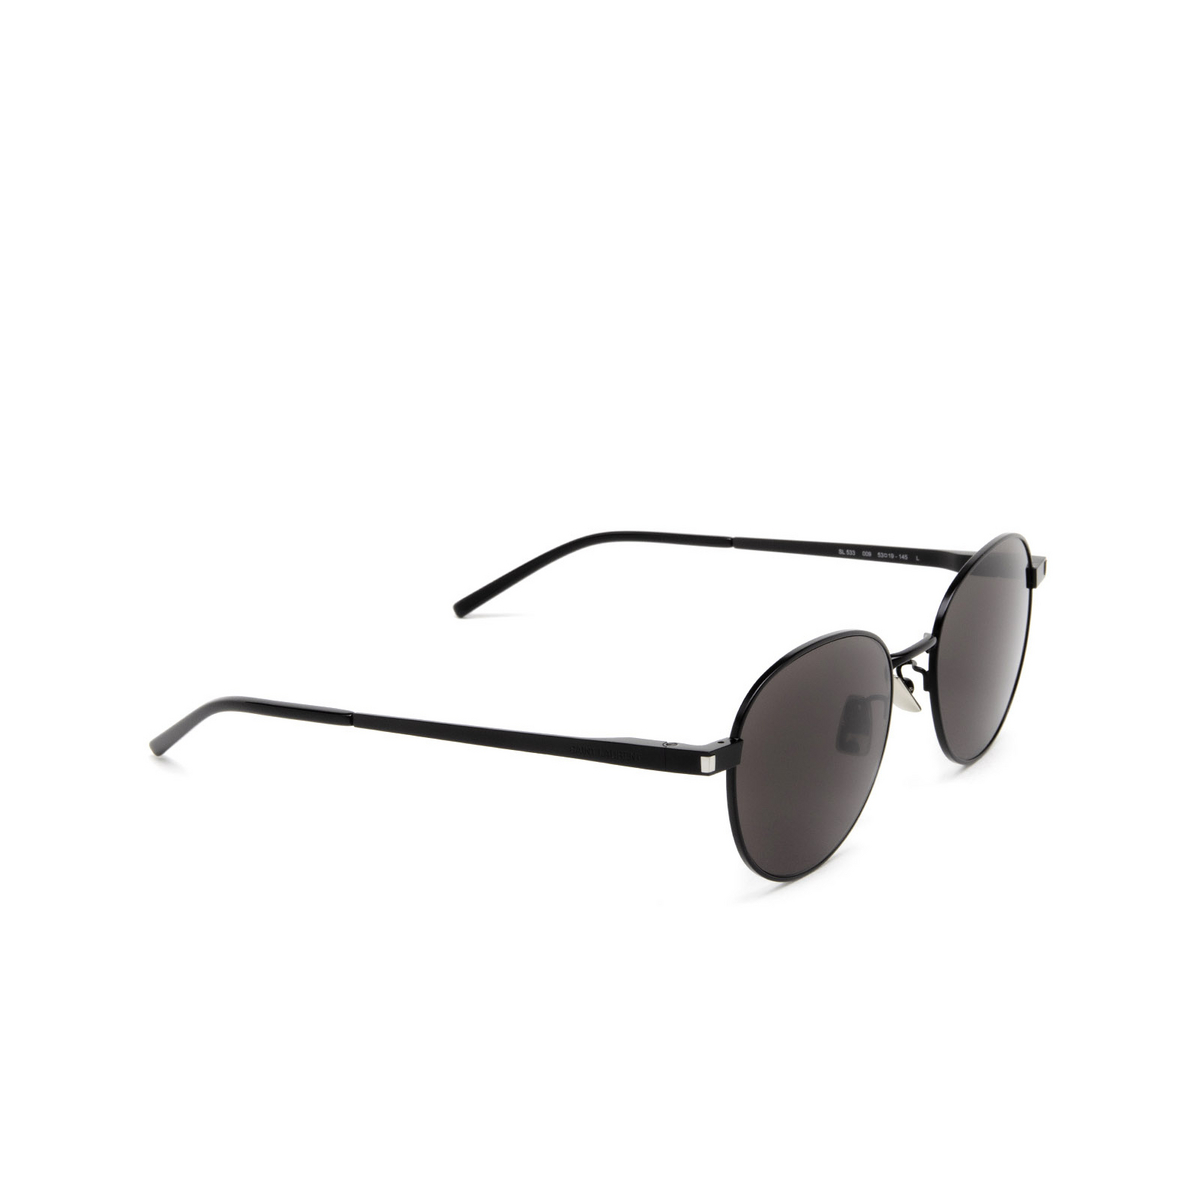 Saint Laurent® Round Sunglasses: SL 533 color Black 009 - three-quarters view.